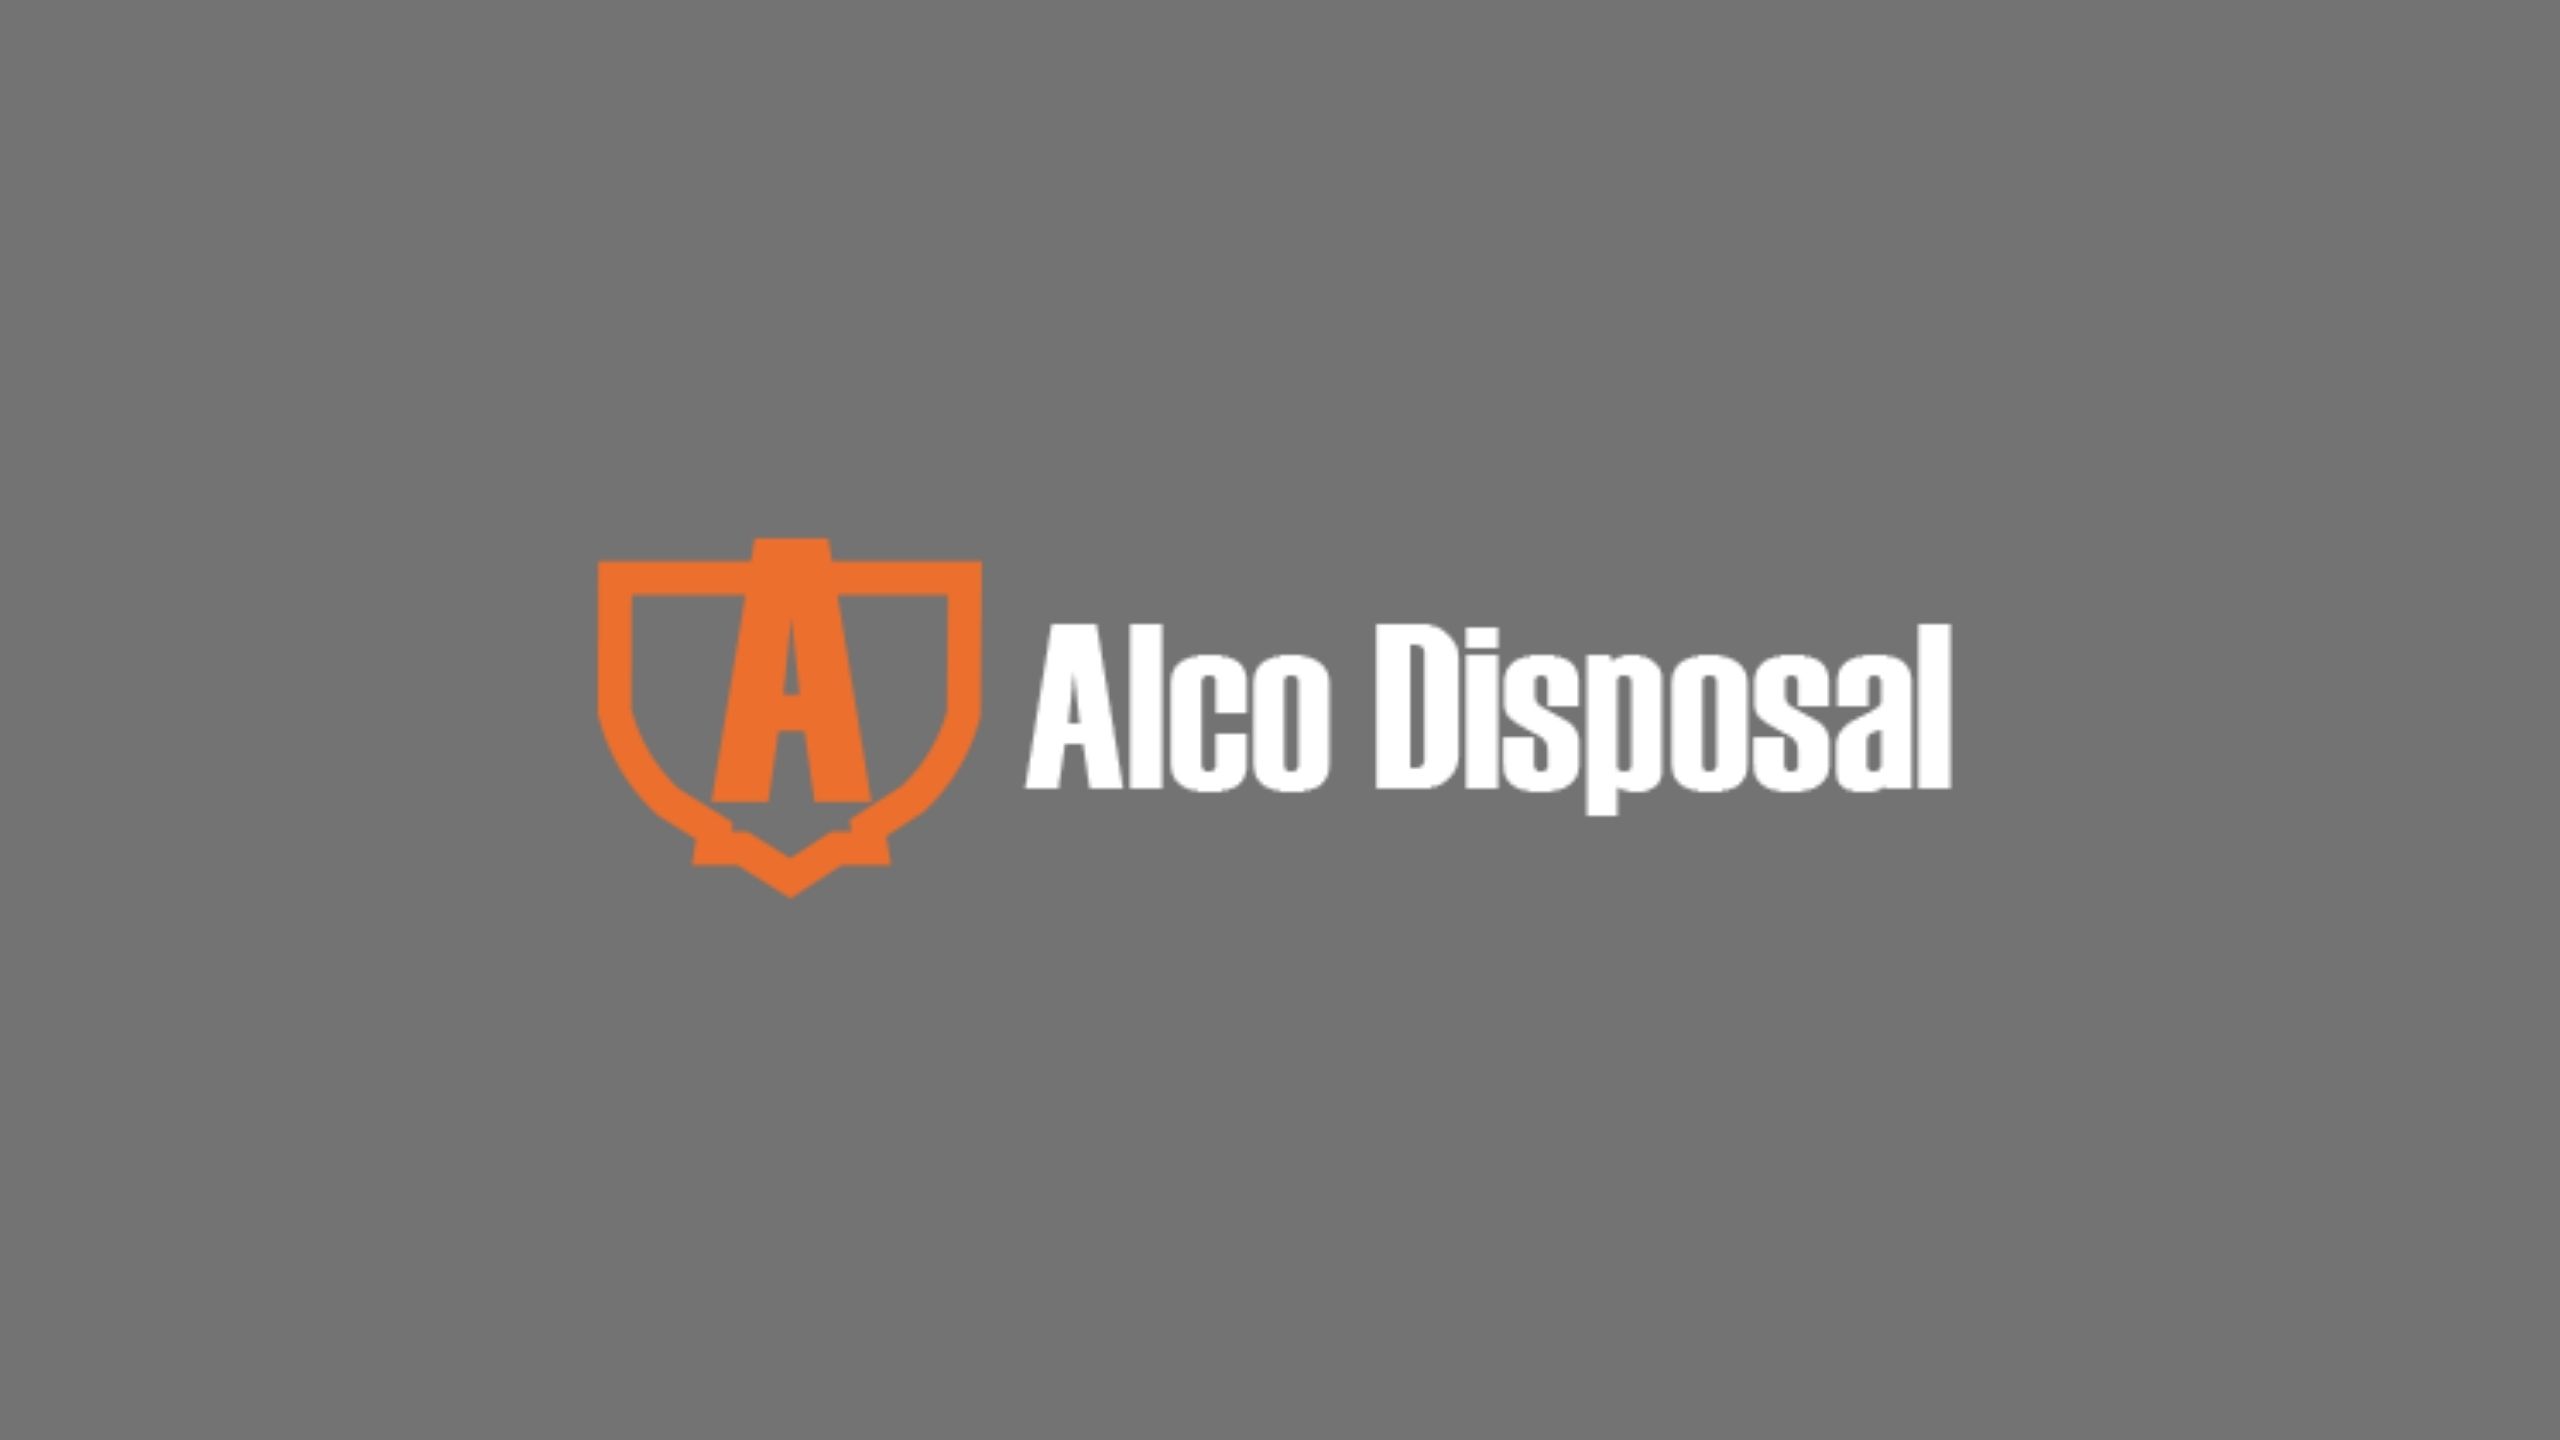 Alco Disposal